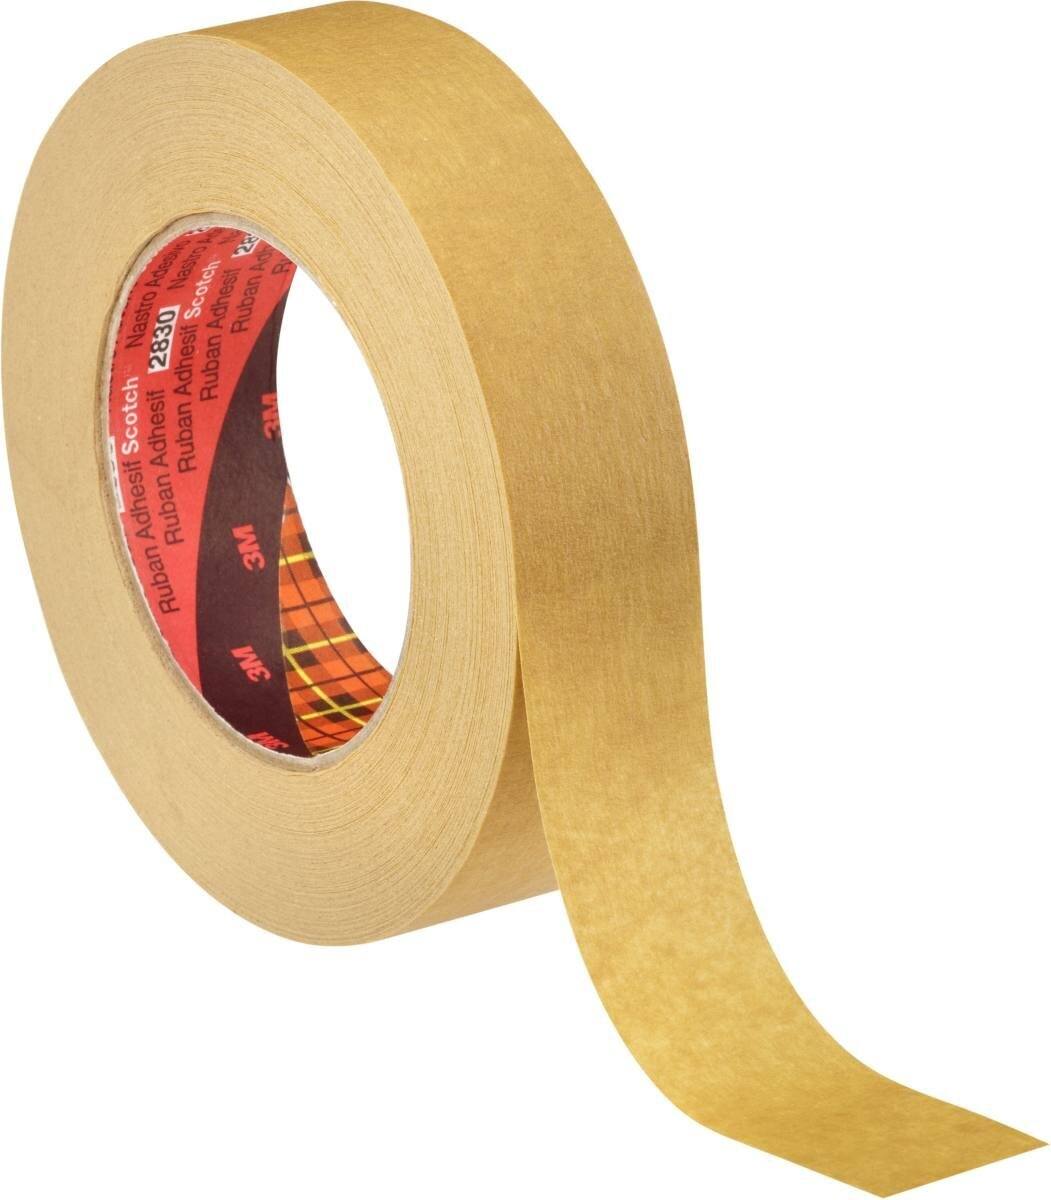 3M Scotch paper tape 2830, brown, 72 mm x 50 m, 0.175 mm